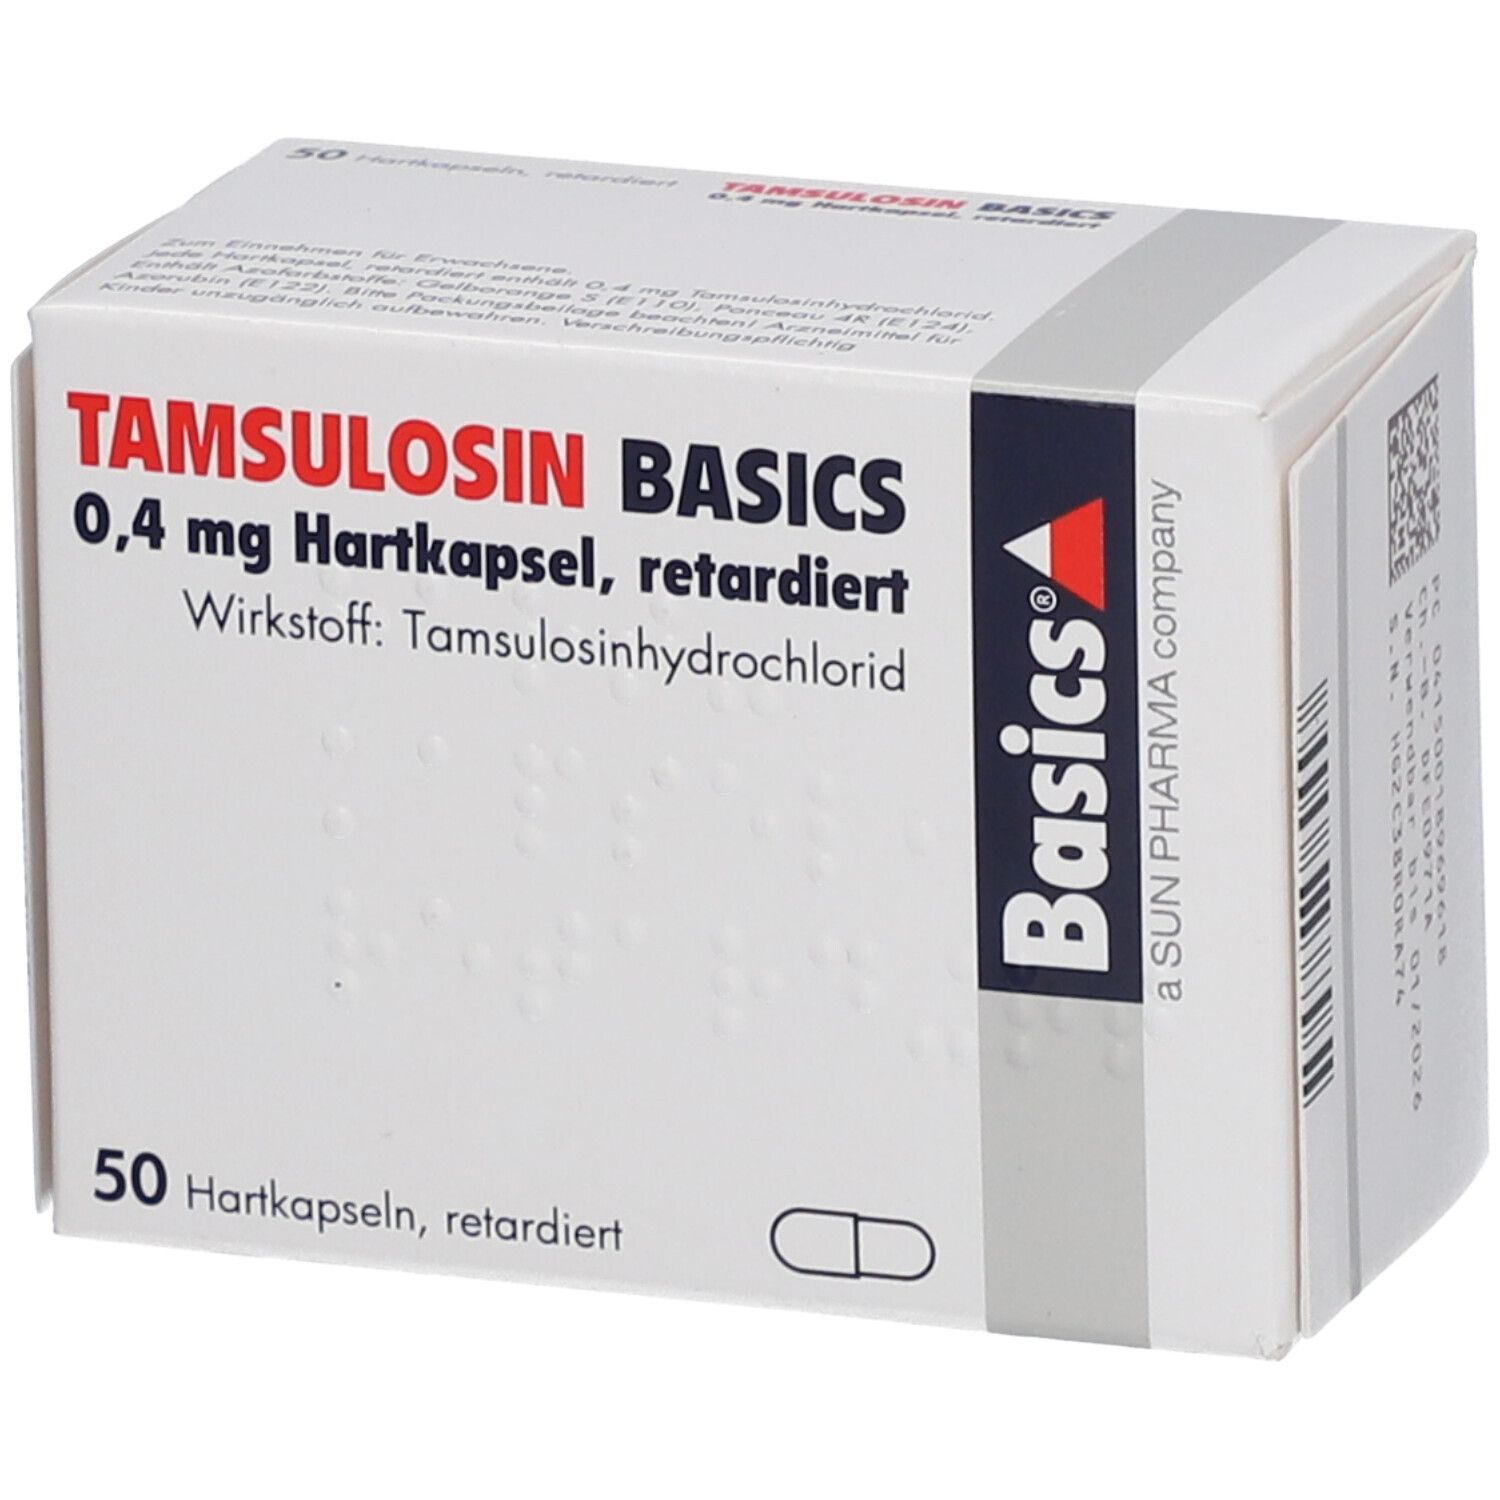 Prospect Medicament - Tamsulosin Aurobindo micrograme capsule cu eliberare prelungita